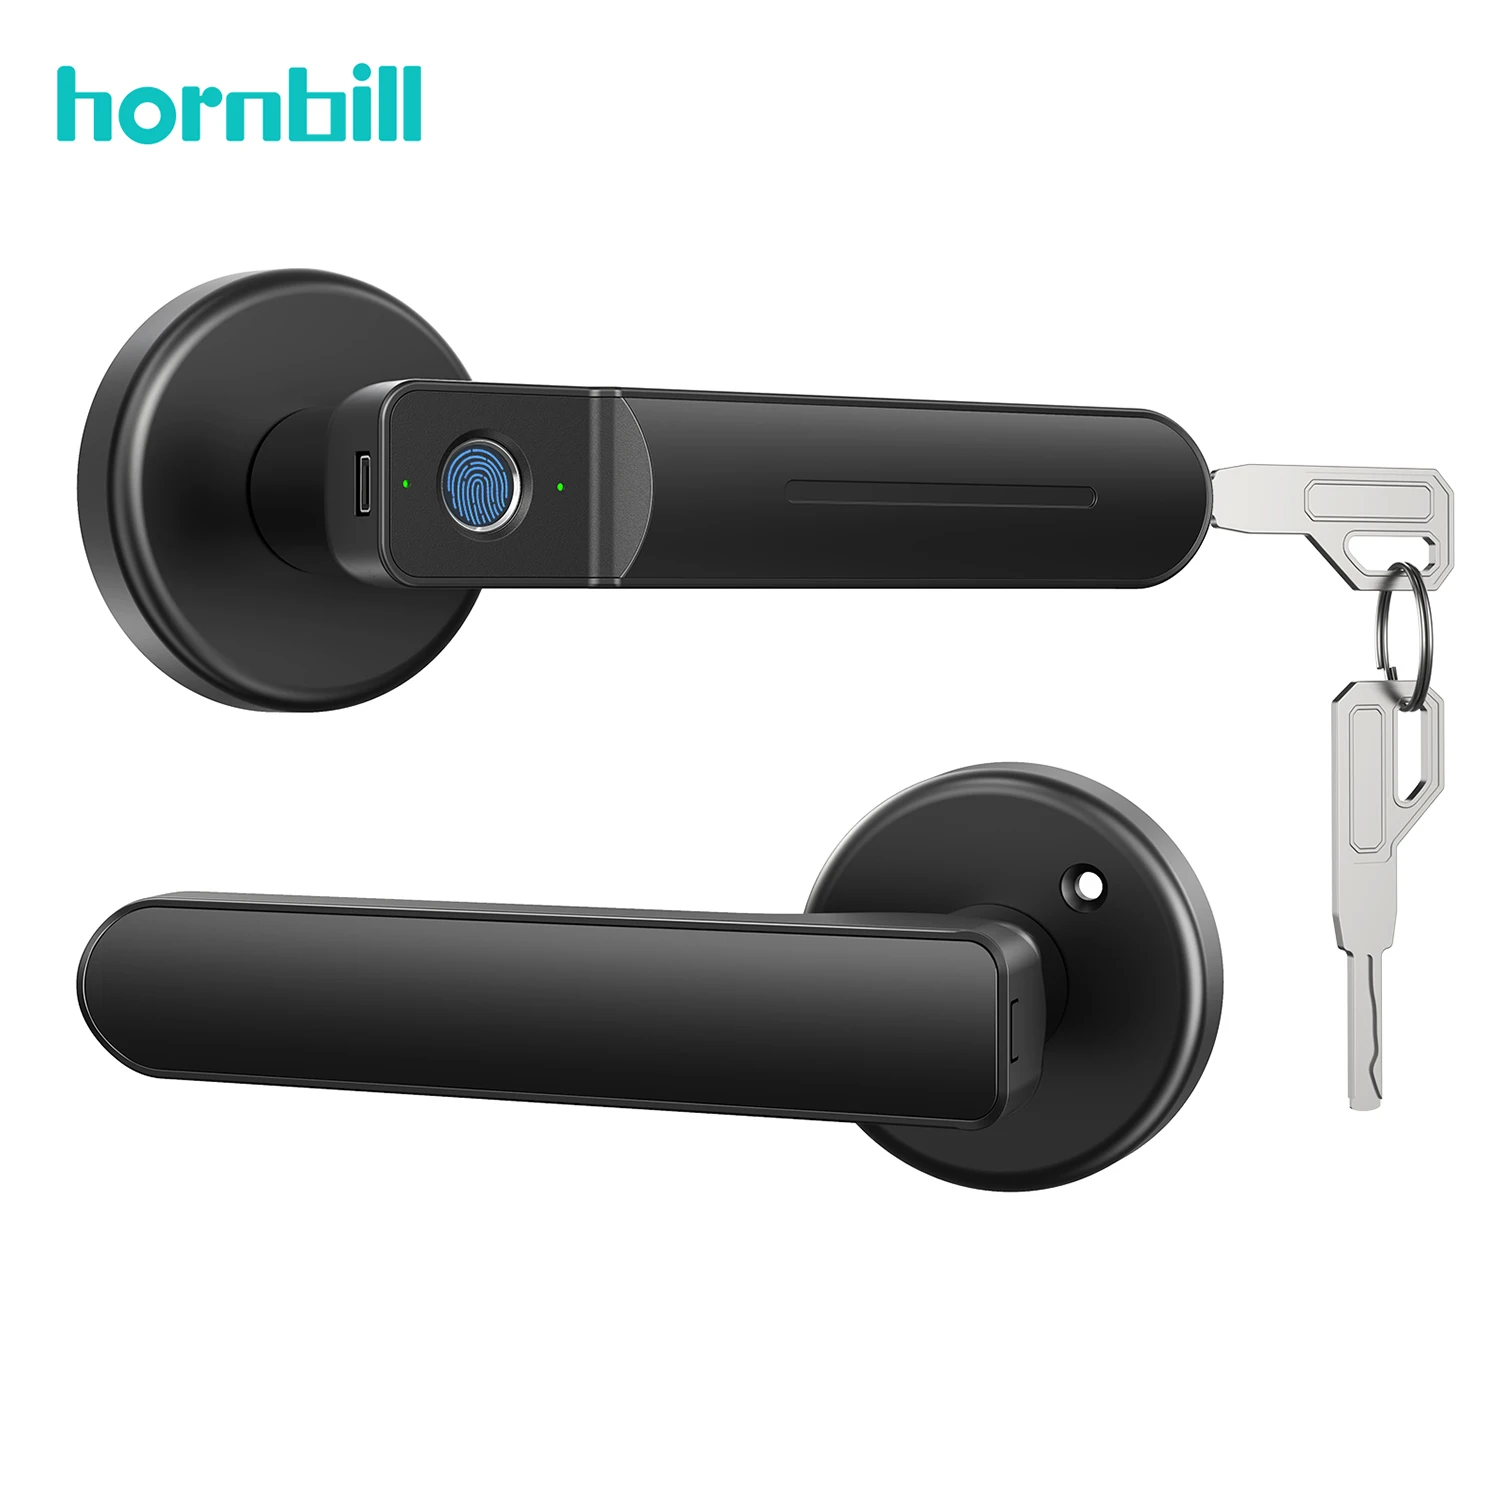 Hornbill ลายนิ้วมือประตูล็อคห้องนอนจับประตูล็อค Biometric Auto ความปลอดภัย Protcrection สำหรับในร่ม Home Office Apartment